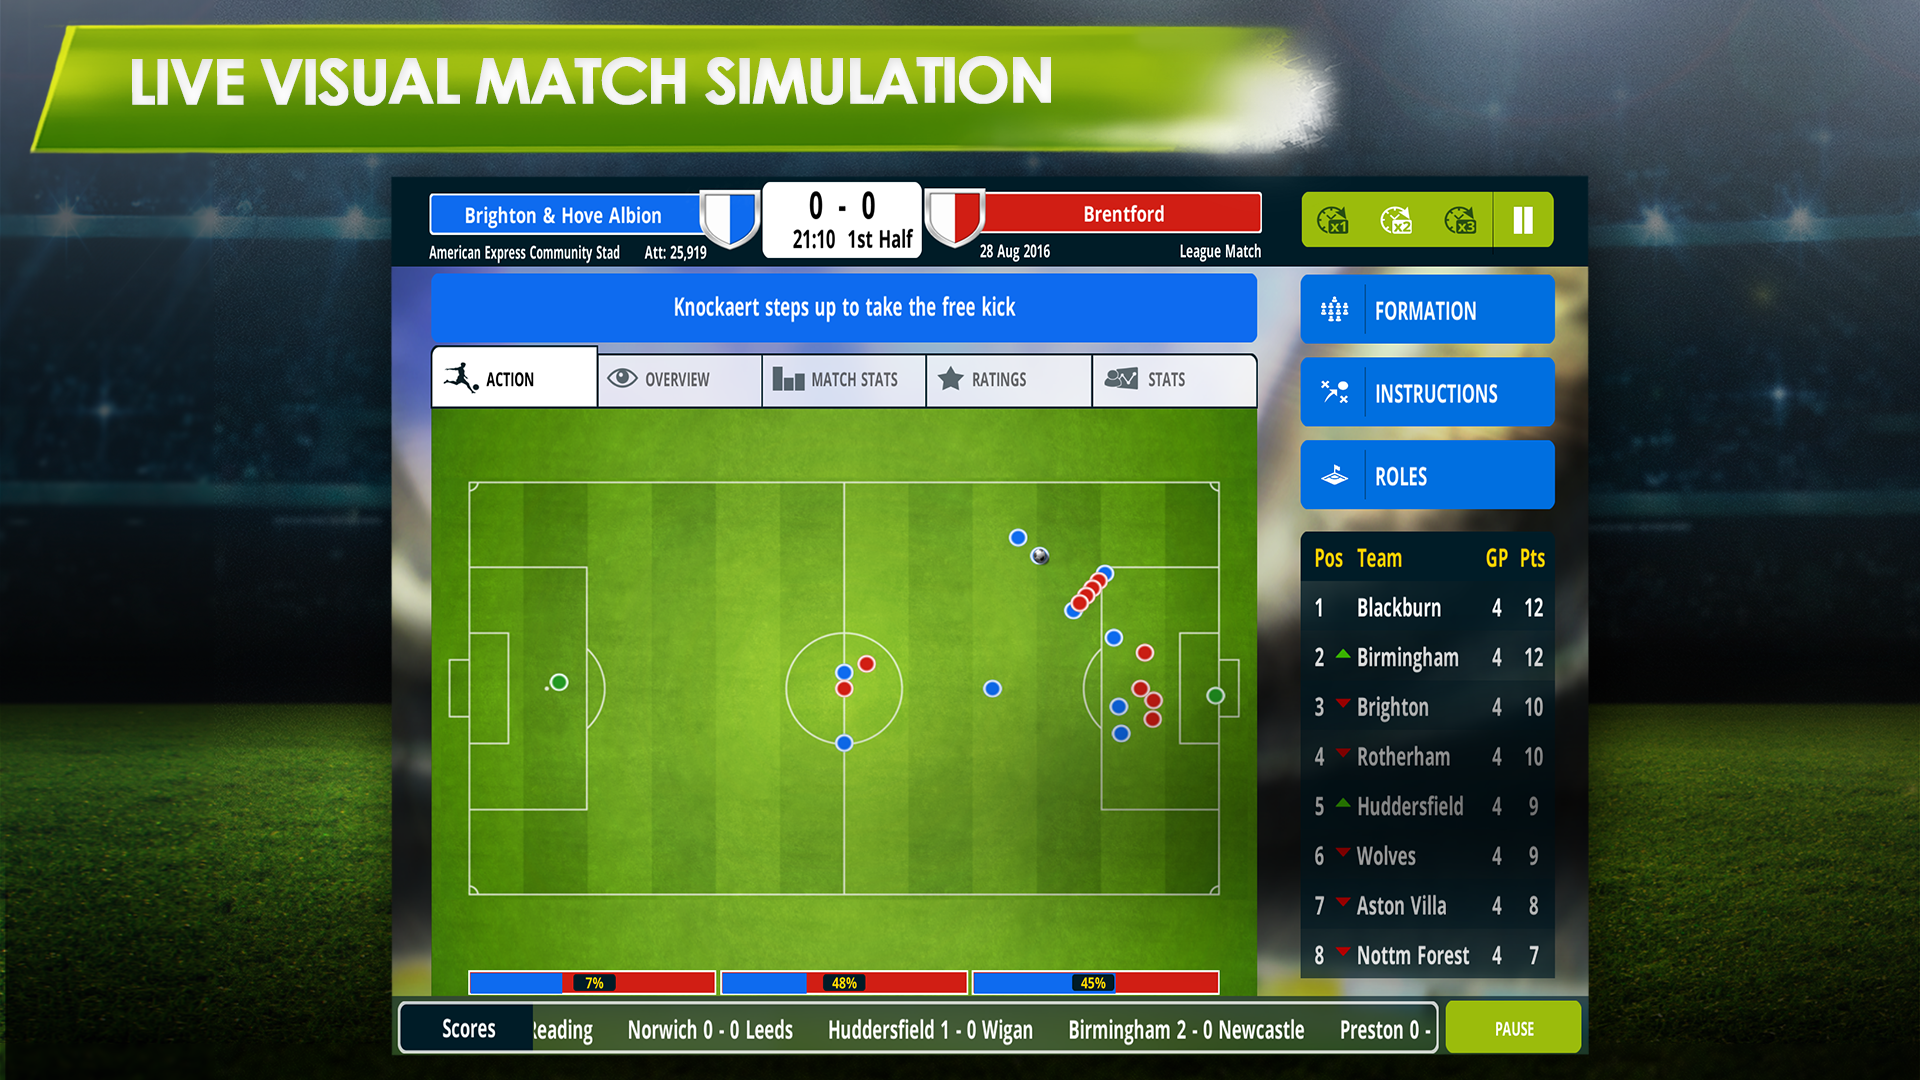 Championship Manager 17 screenshot game